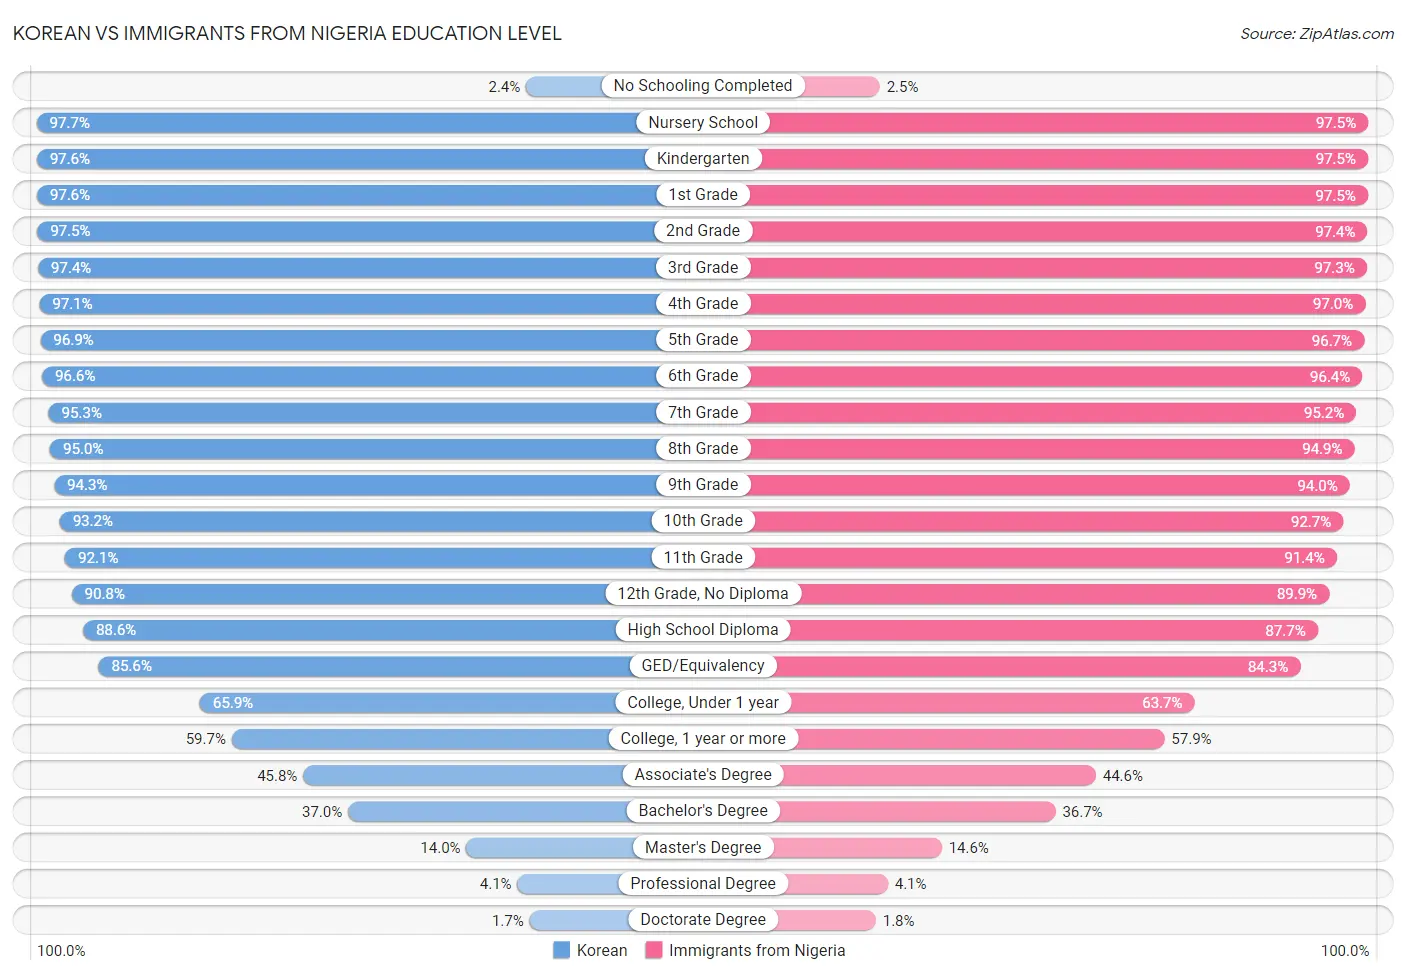 Korean vs Immigrants from Nigeria Education Level